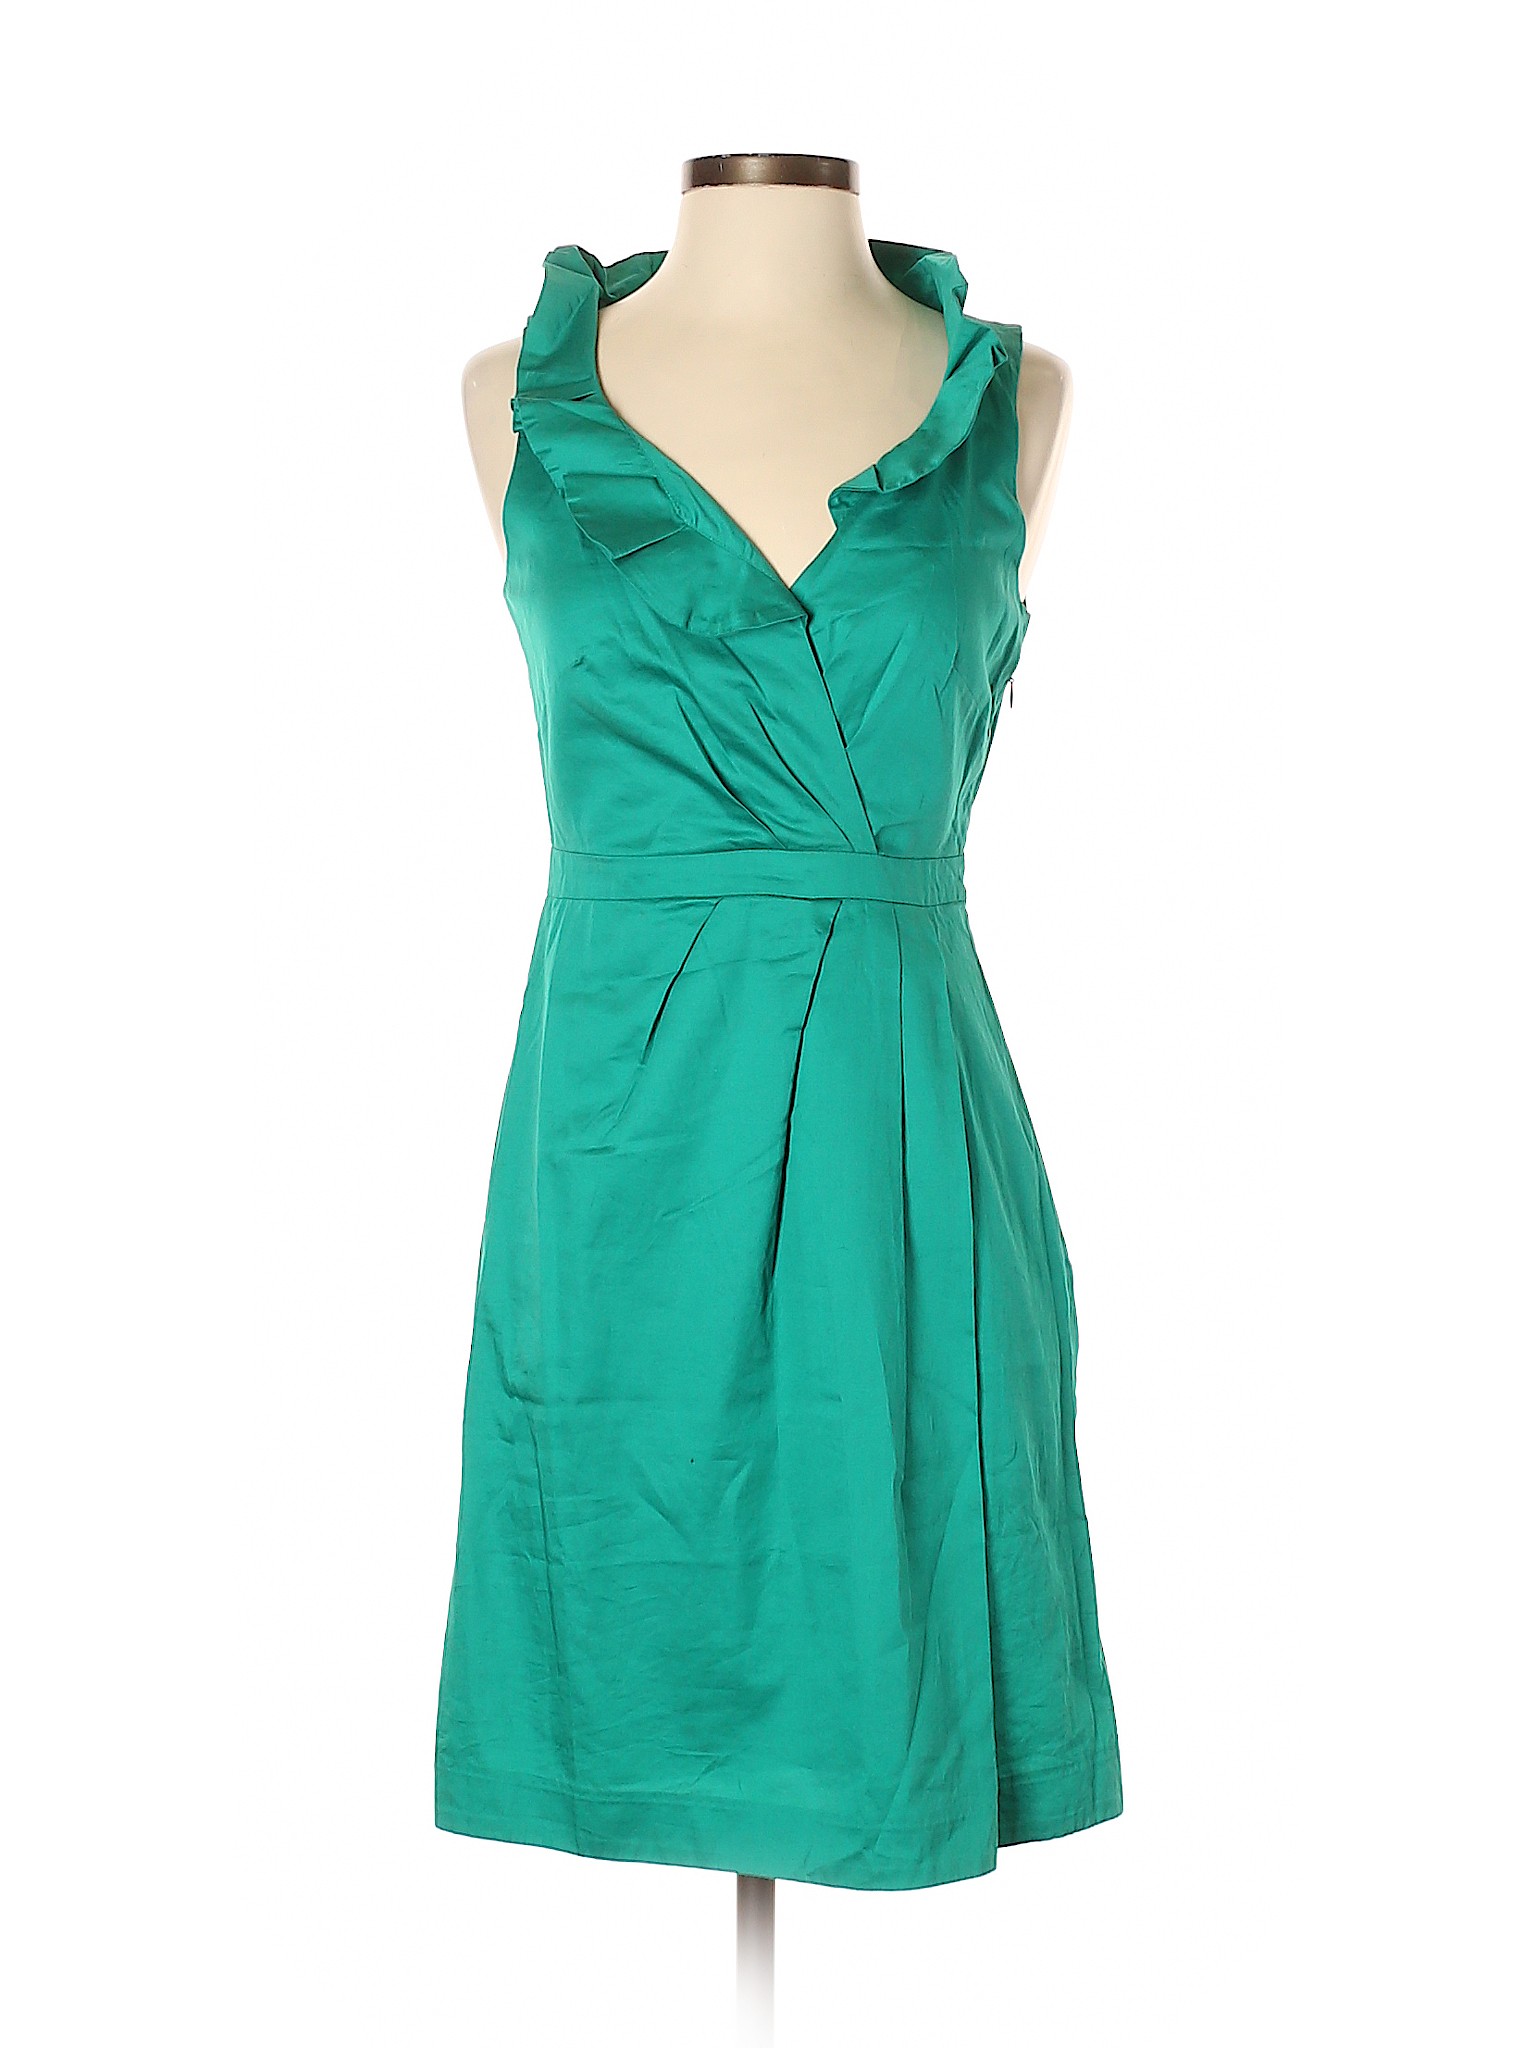 NWT J. Crew Factory Store Women Green Casual Dress 2 | eBay